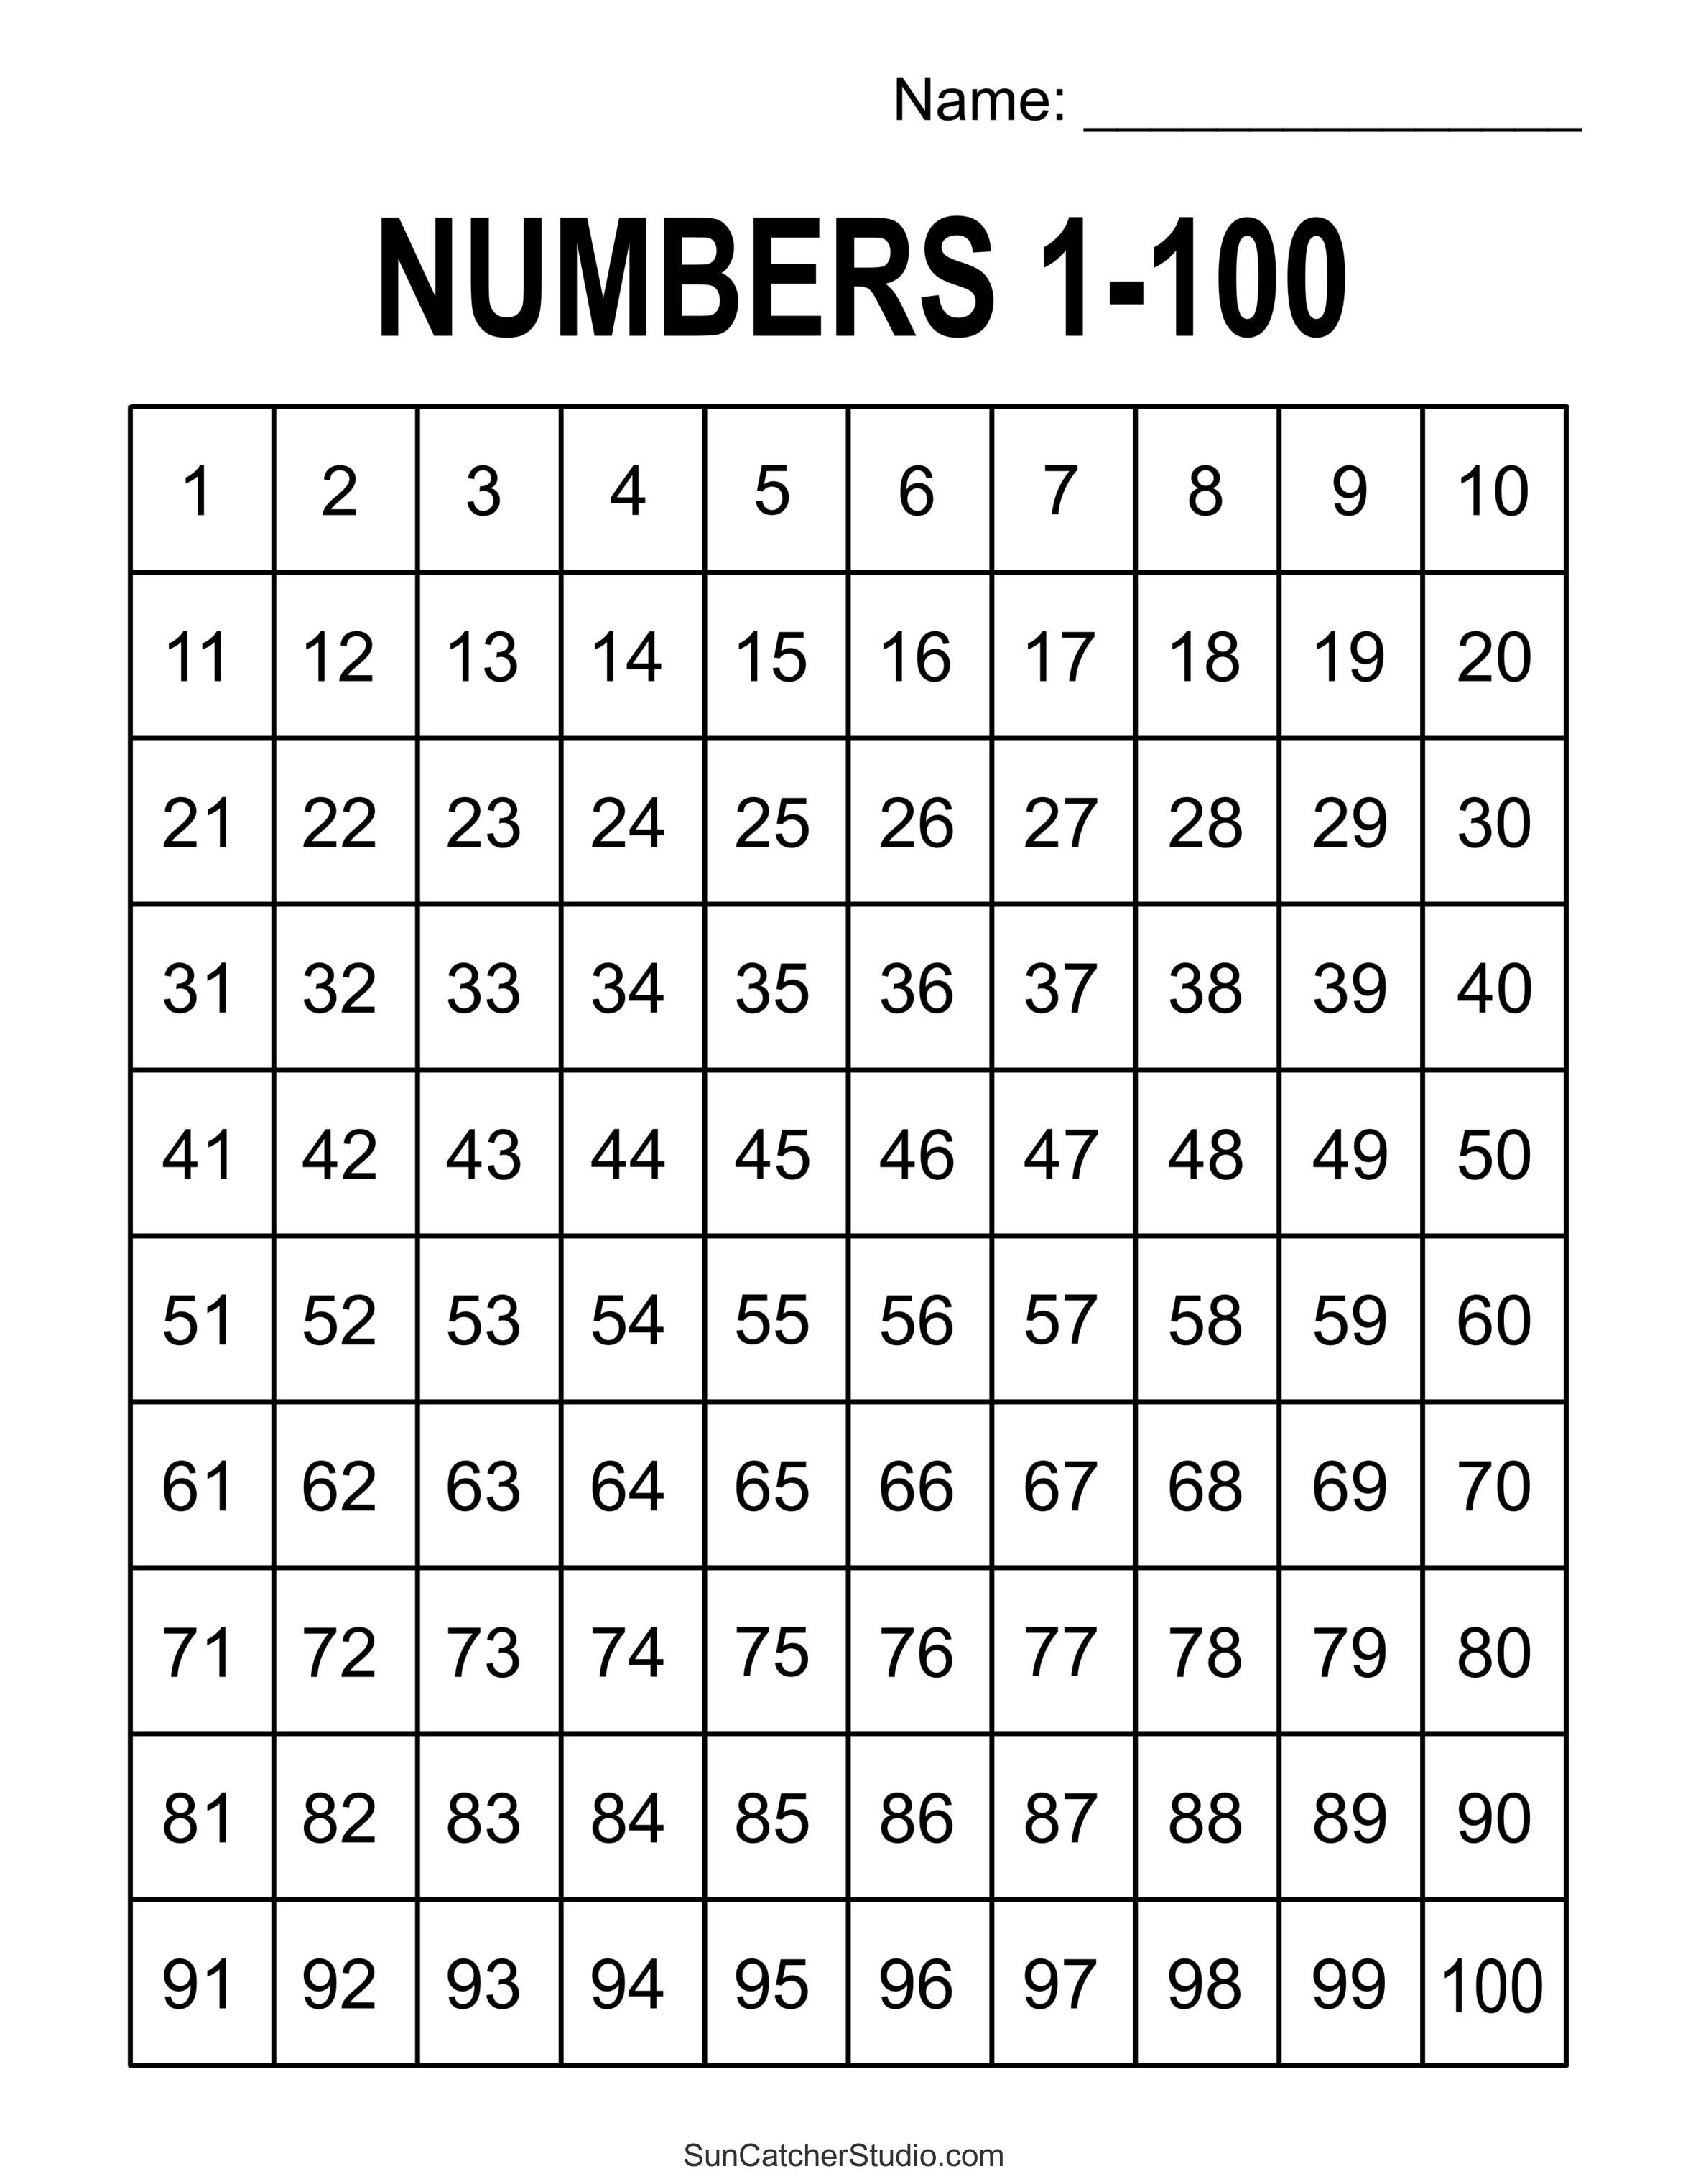 Printable List Of Numbers 1 100 - Infoupdate.org